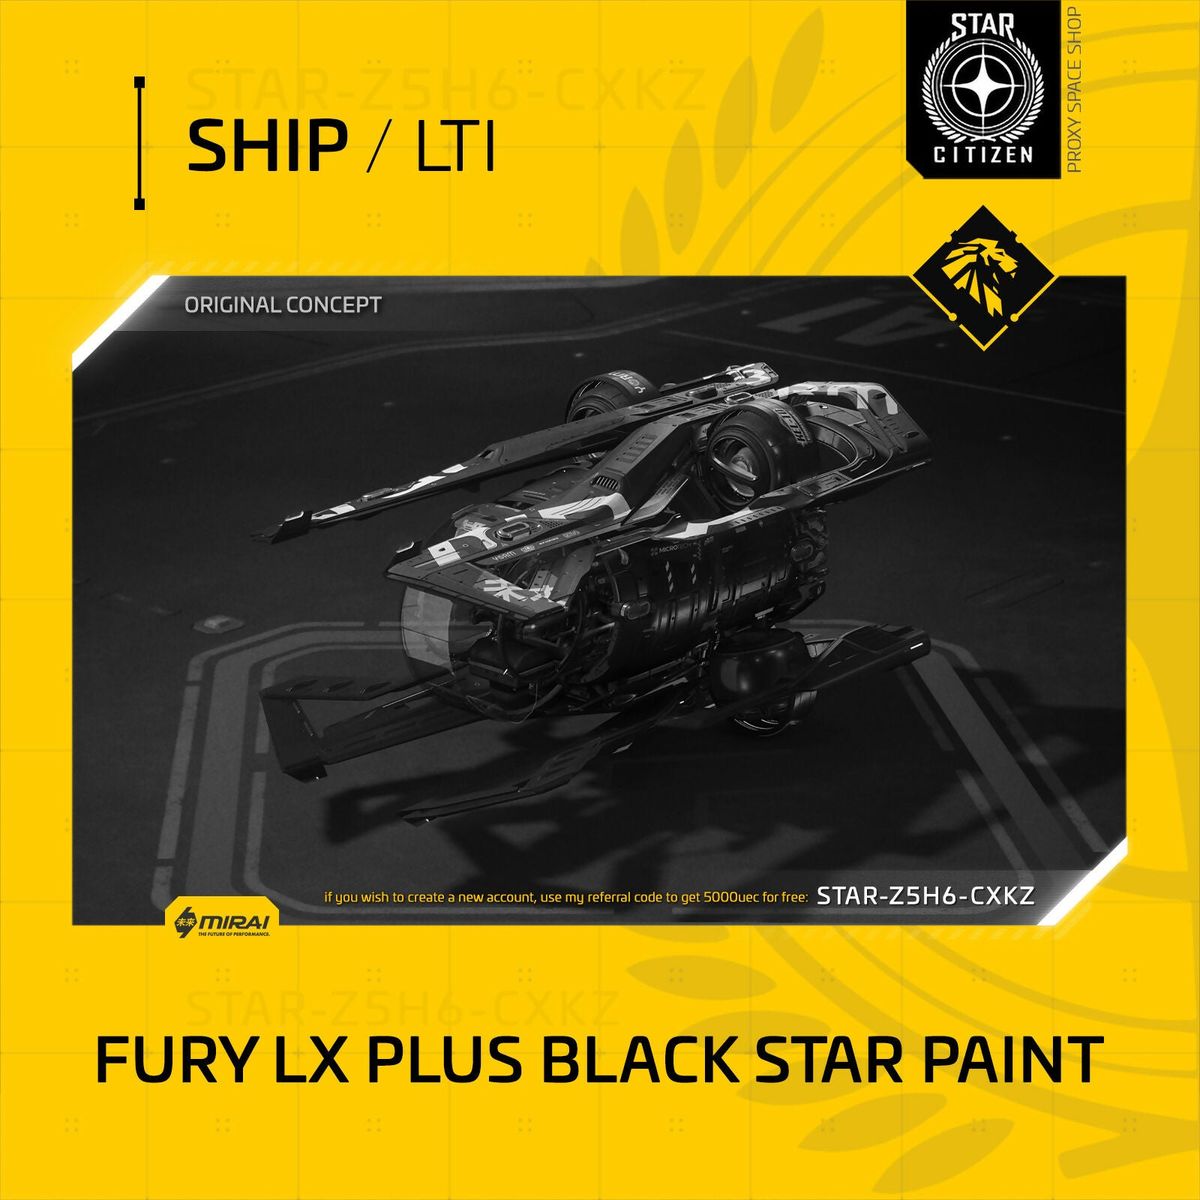 Mirai Fury Lx Plus Black Star Paint - Lti - Original Concept OC